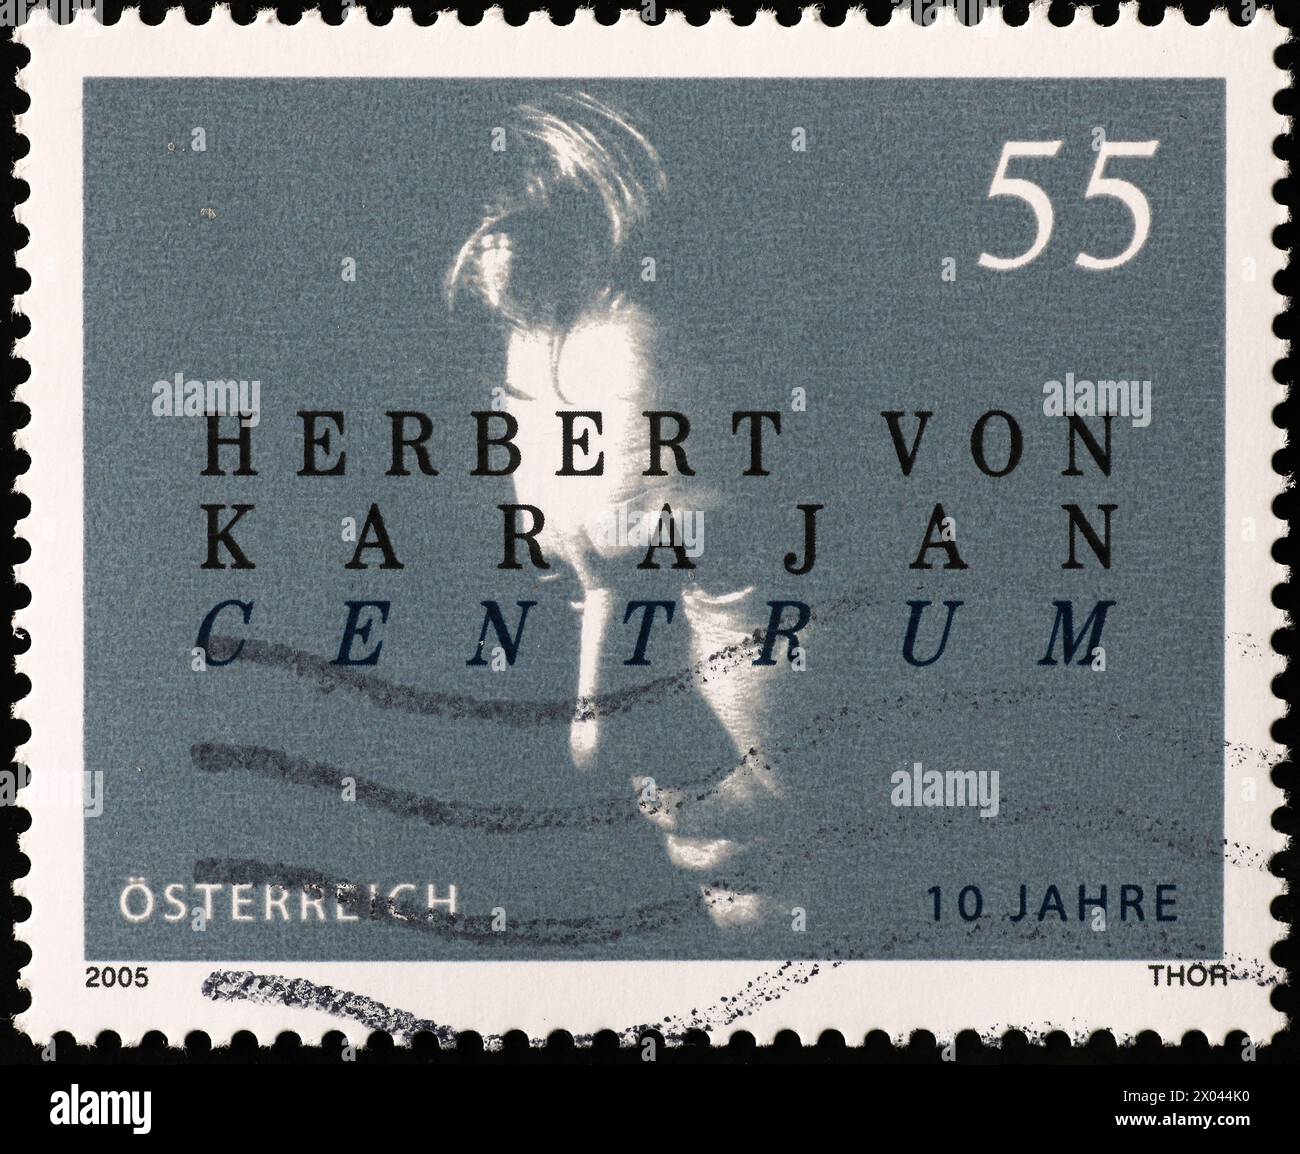 Herbert von Karajan on austrian postage stamp Stock Photo